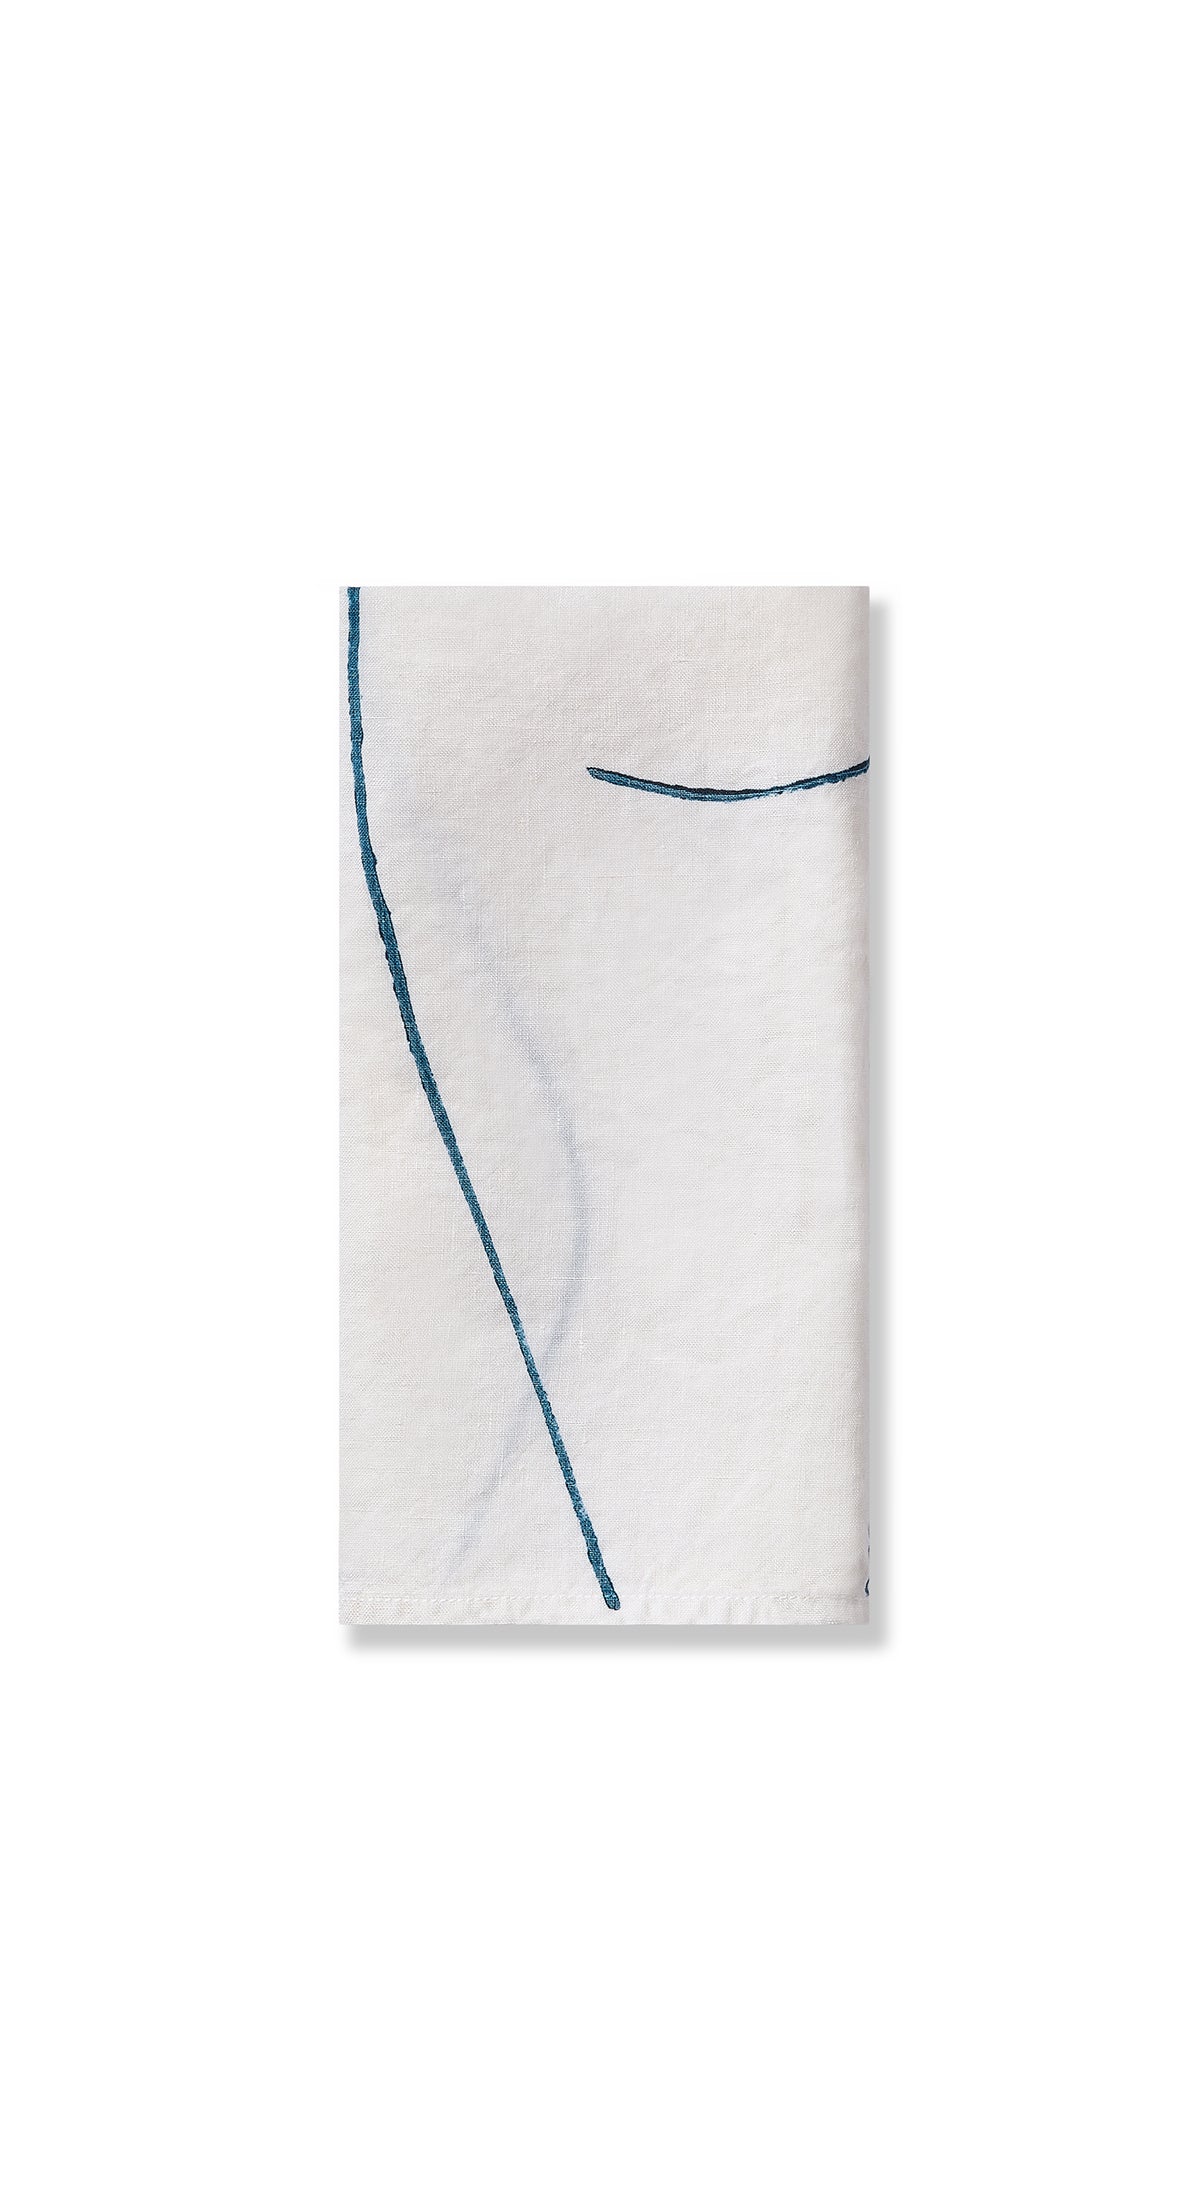 Nude Linen Napkin "Female Rear" in Midnight Blue, 50x50cm